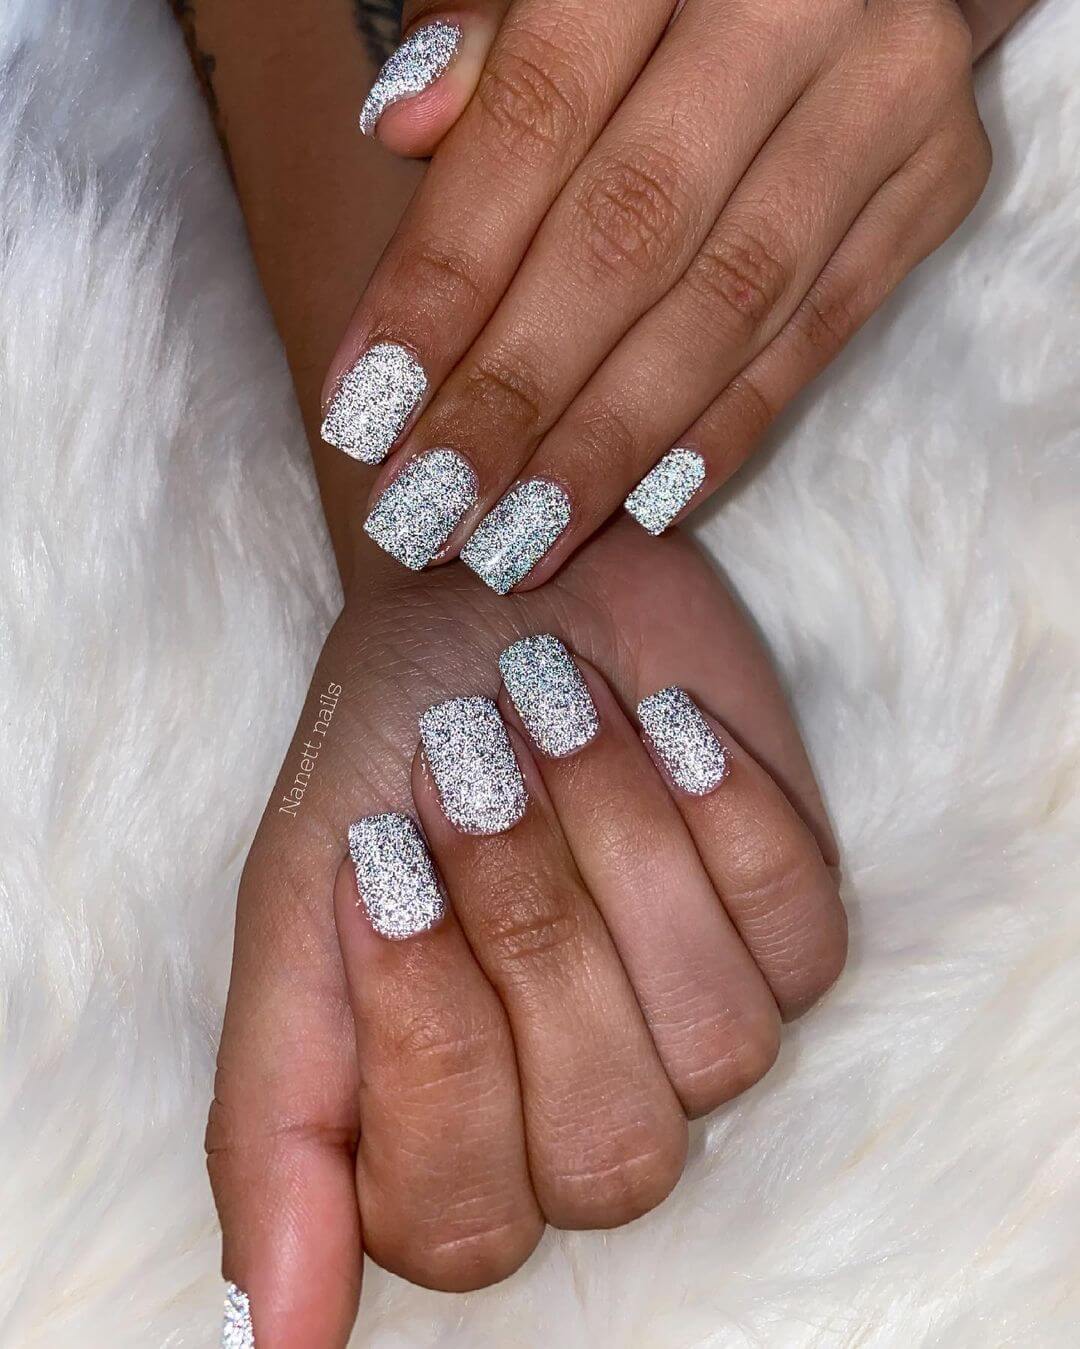 Shining glittered silver nail art work